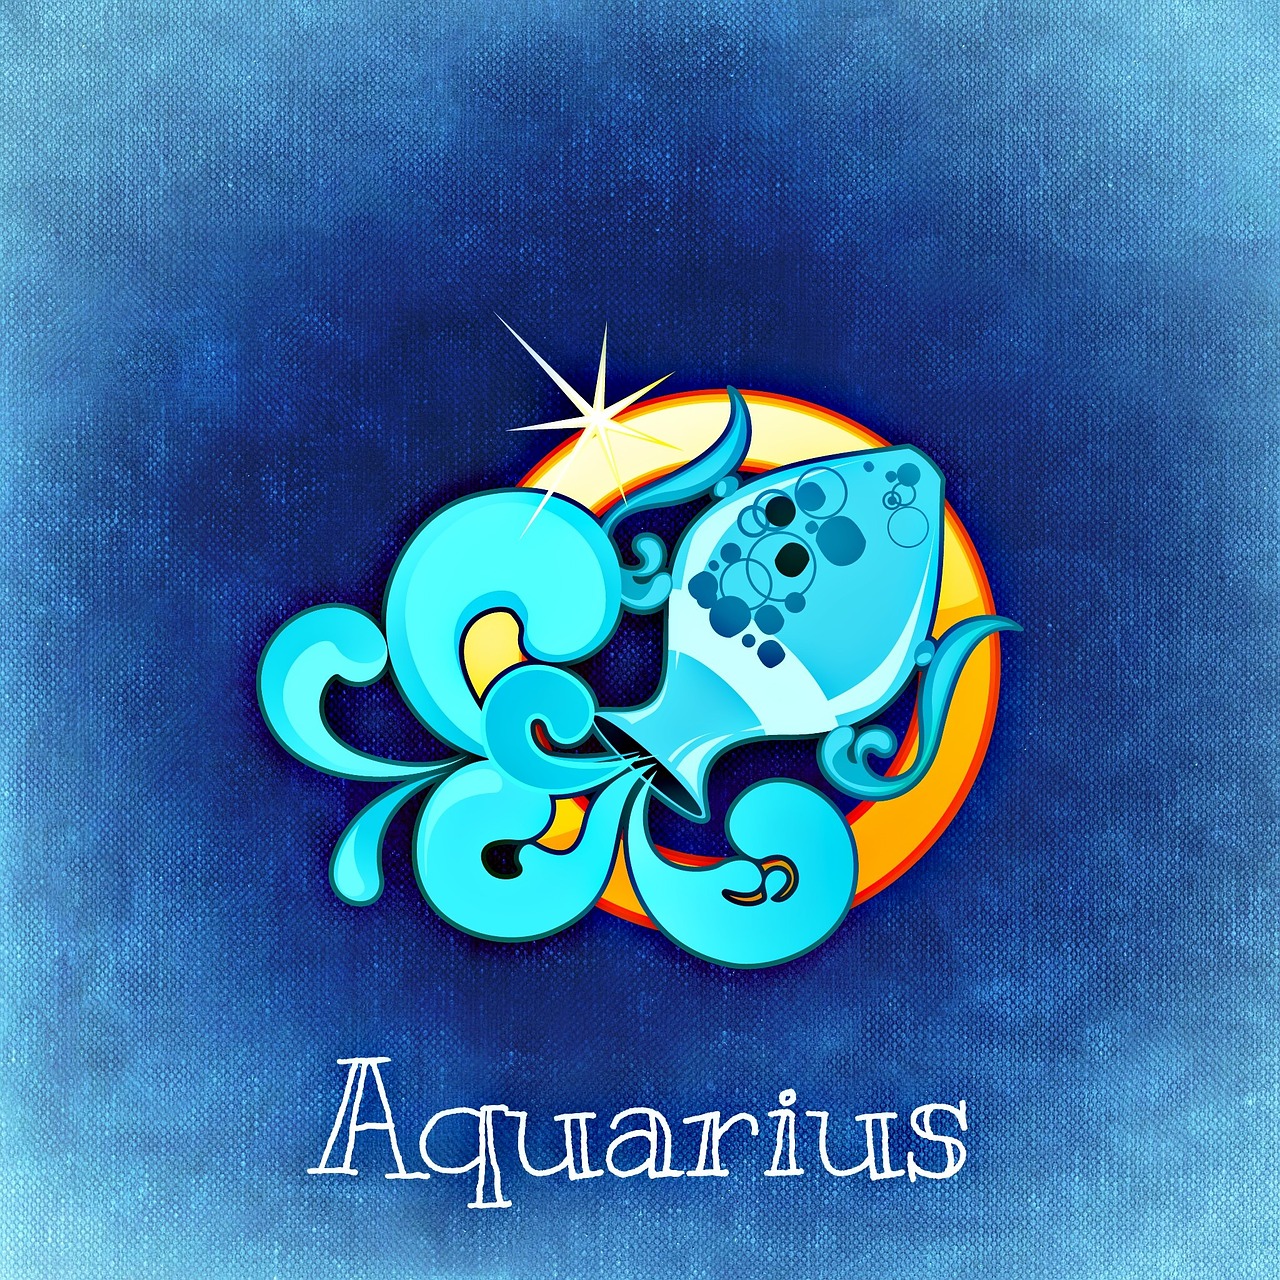 ¿Quién creó el Aquarius?